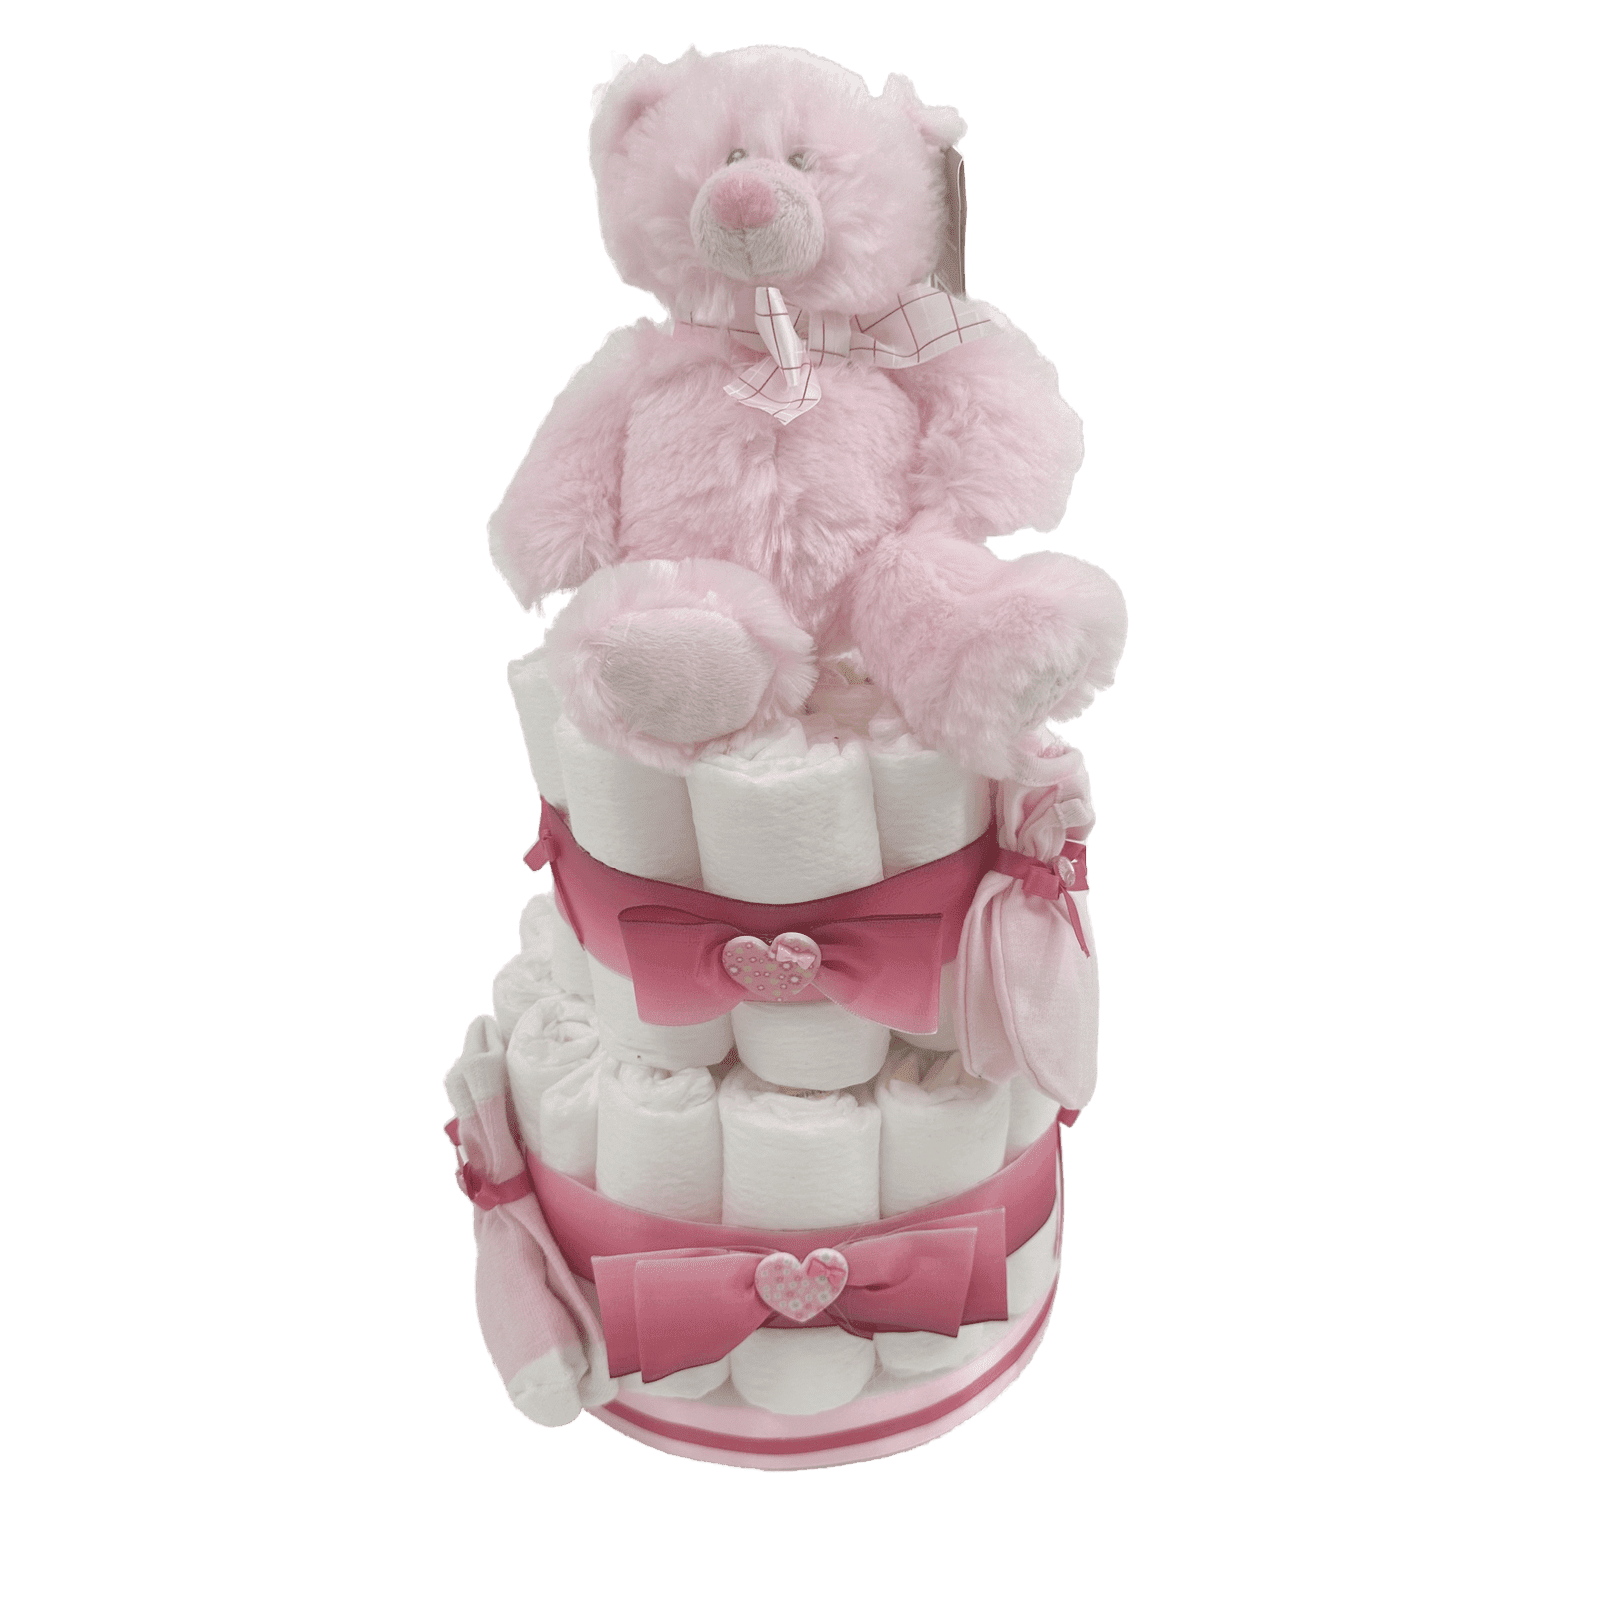 How to Make a Cute & Easy Diaper Cake | LoveToKnow